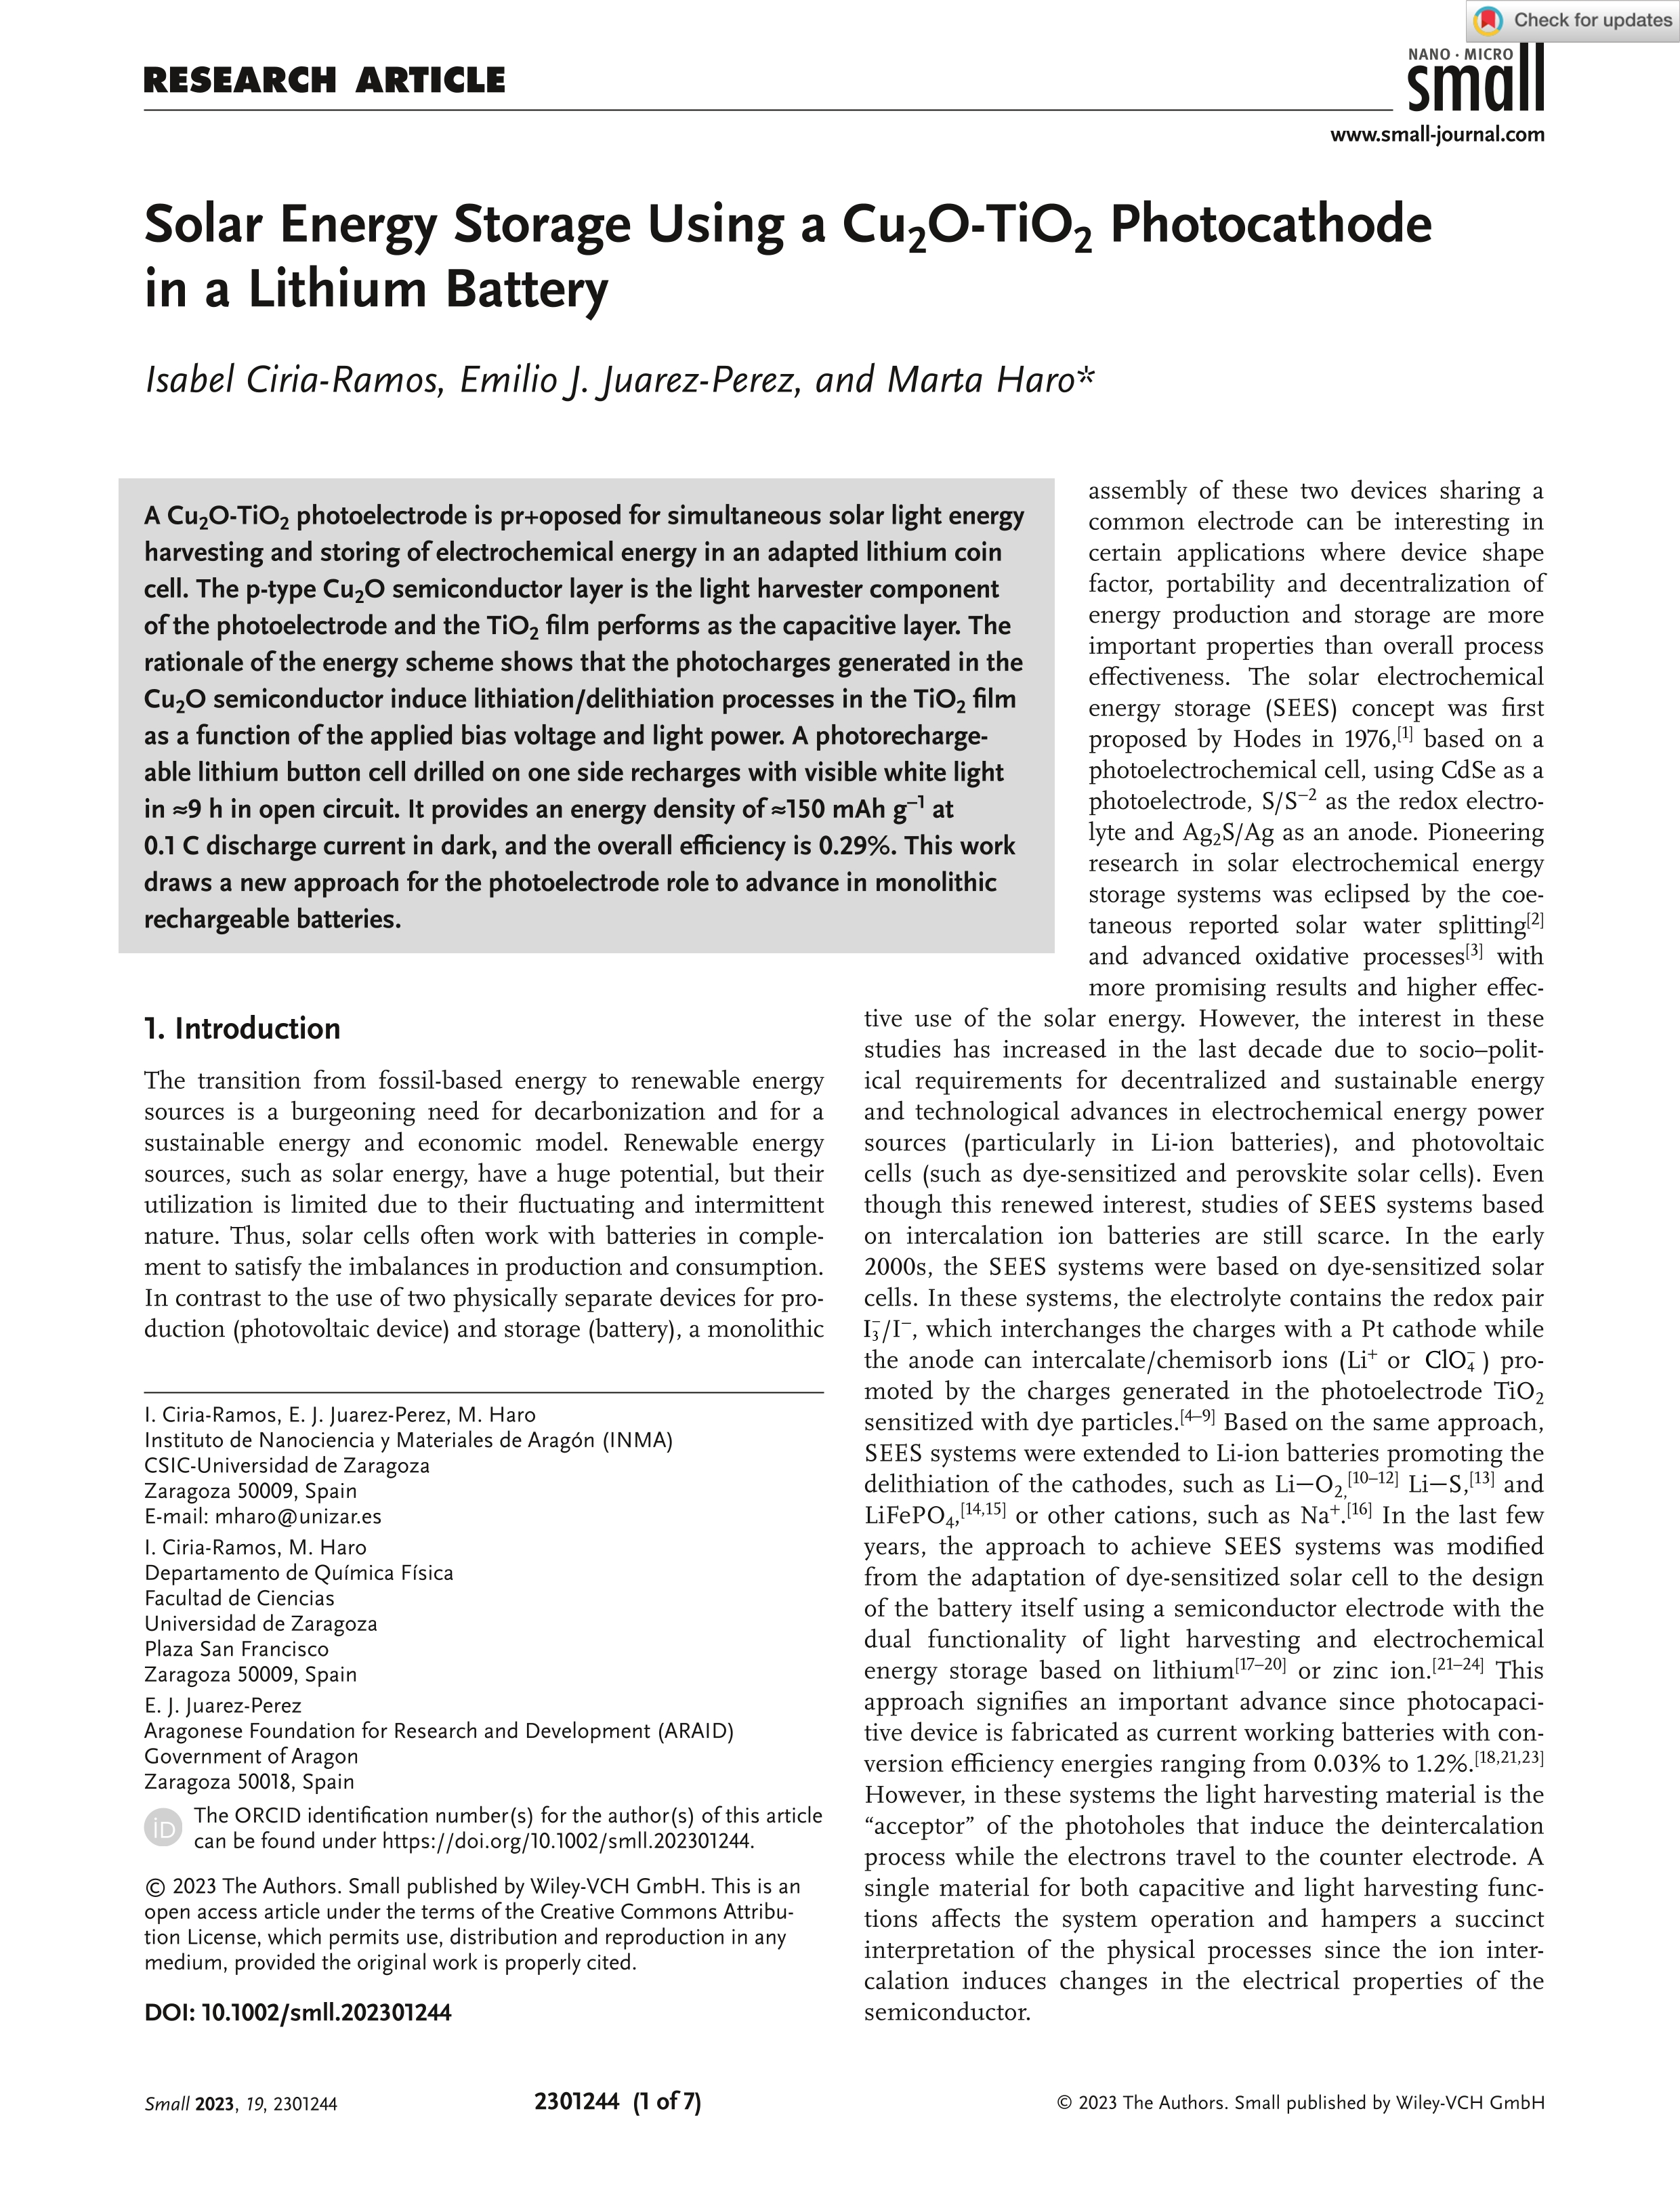 Solar energy storage using a Cu2O-TiO photocathode in a lithium battery